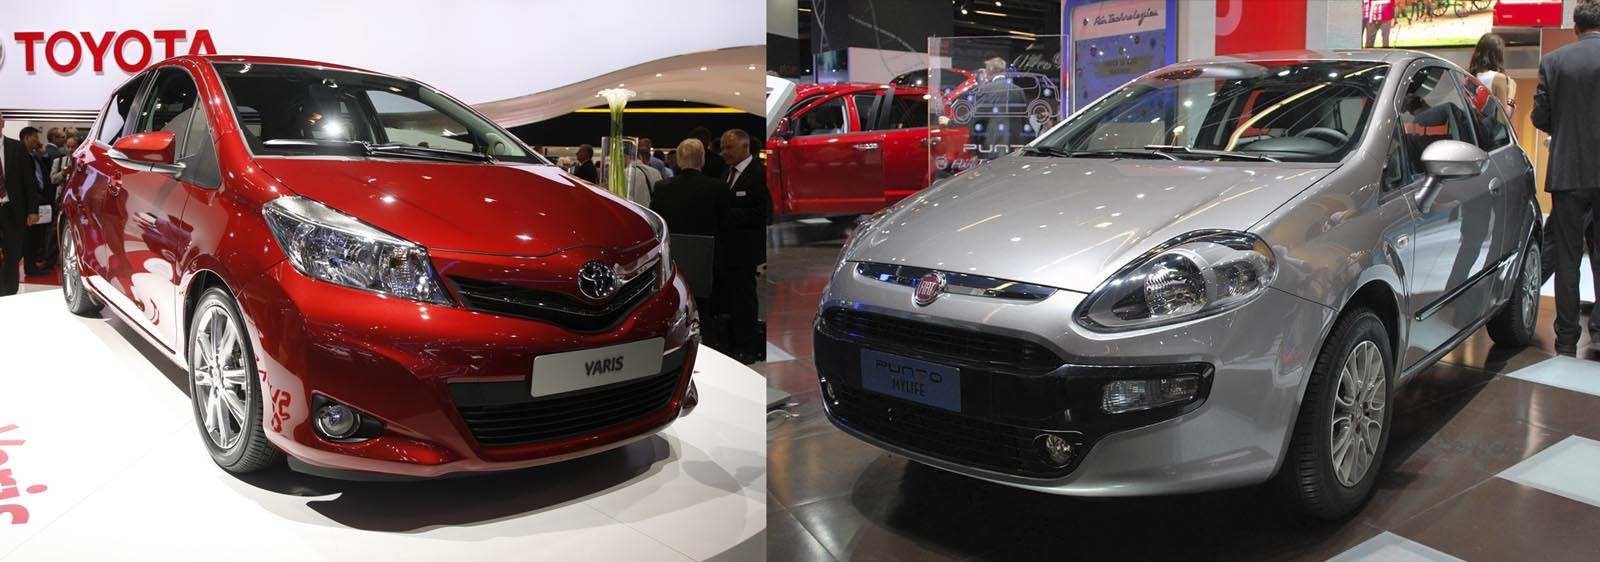 Toyota Yaris vs. Fiat Punto facelift